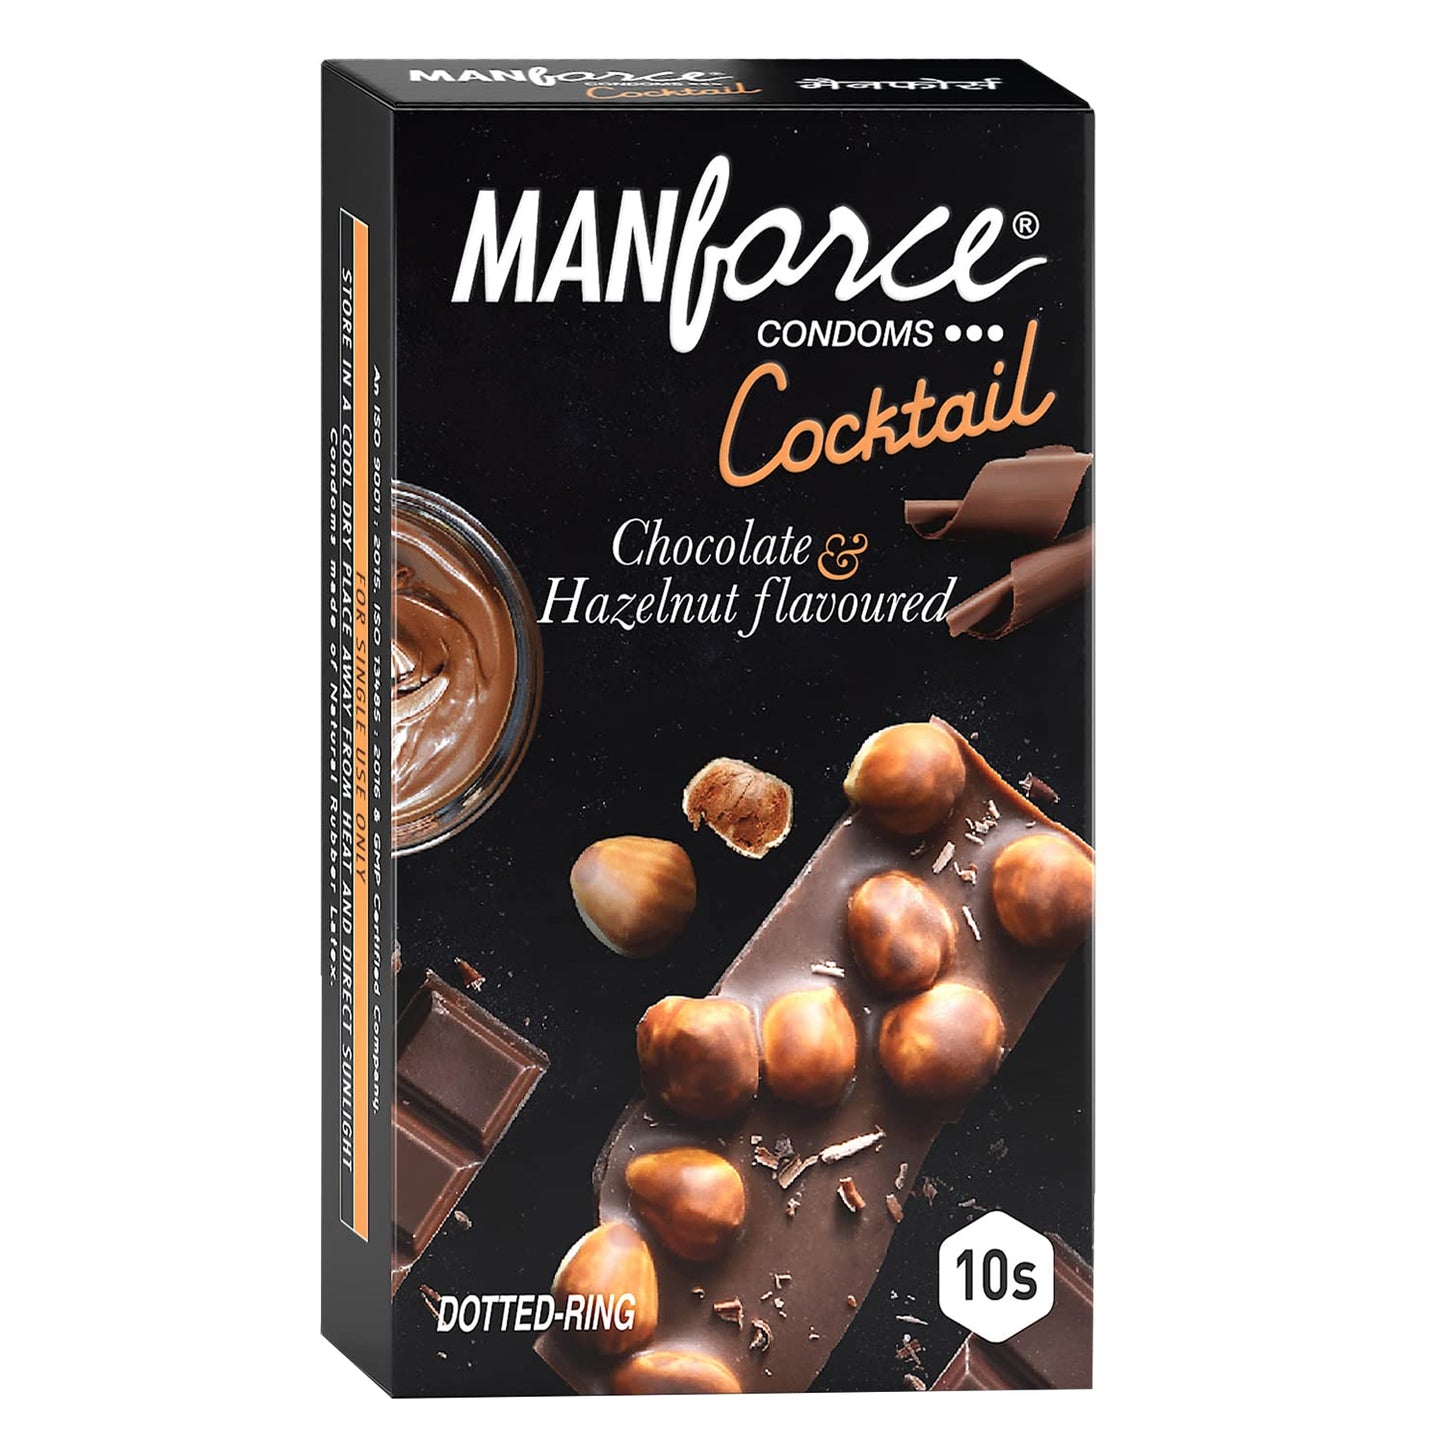 Manforce Chocolate & Hazelnut Cocktail Condoms, 10 Pieces